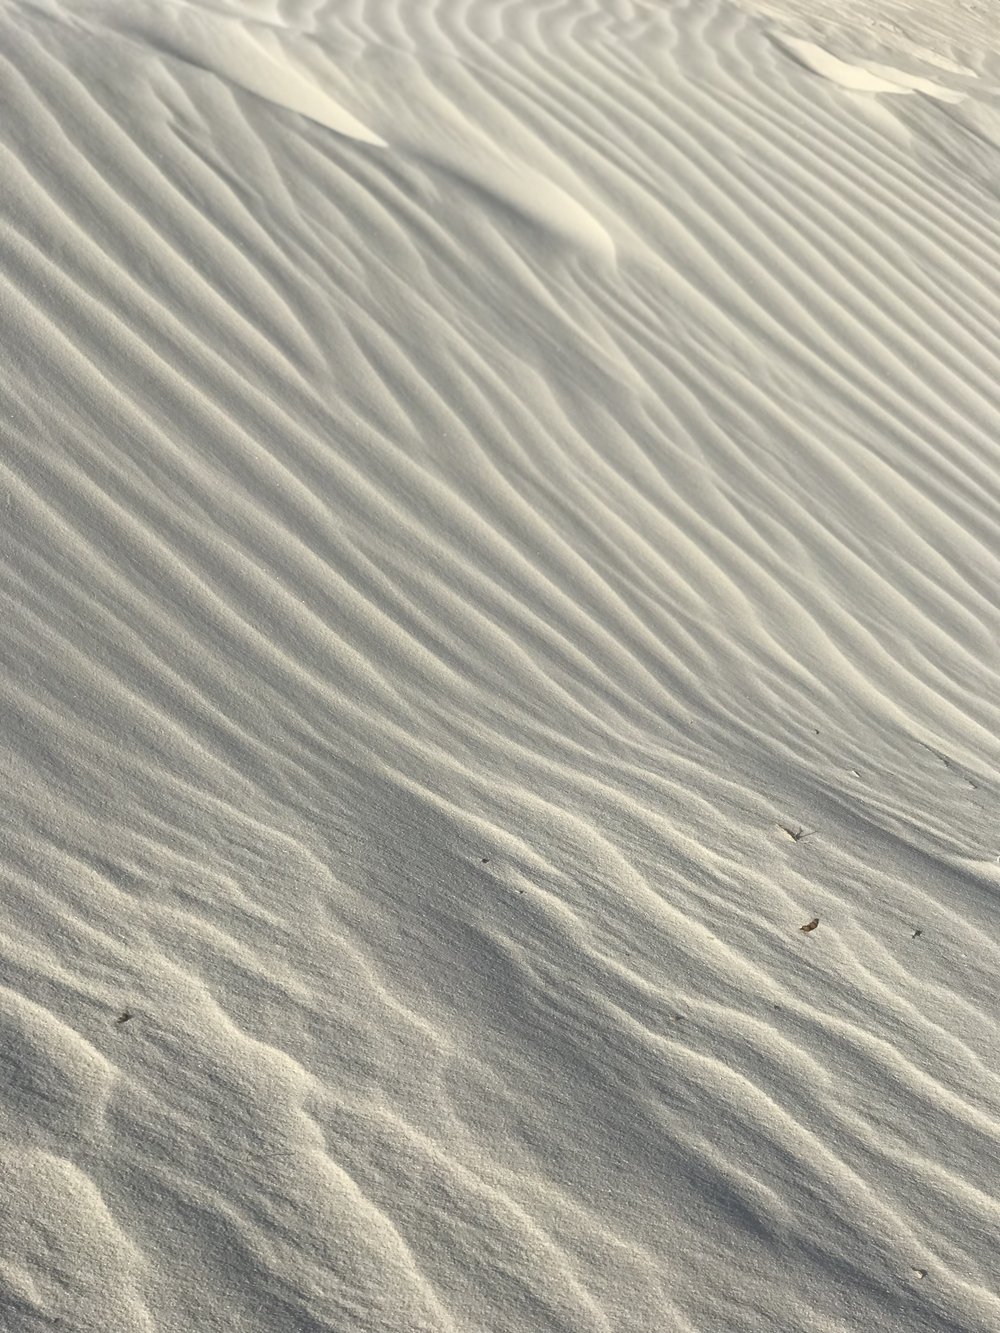 Gypsum-Dunes-Mexico.jpeg